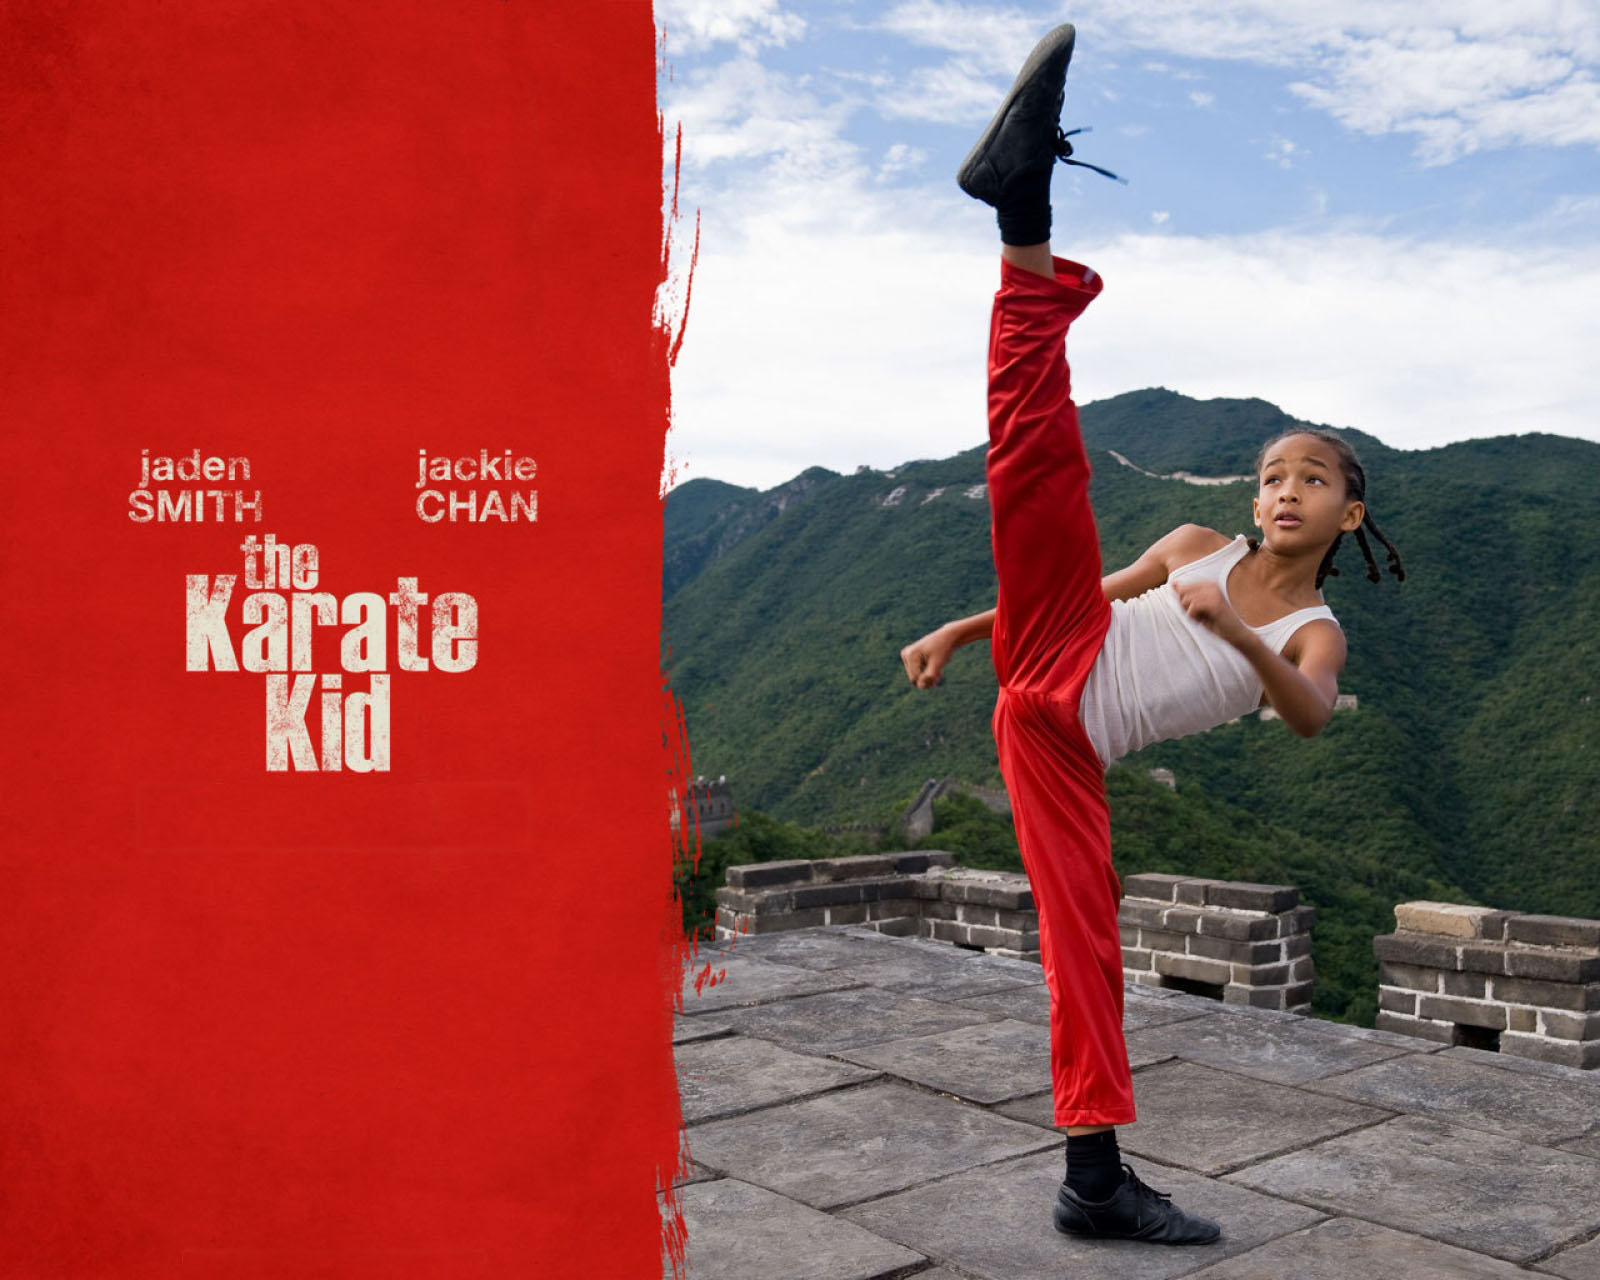 the karate kid hindi movie doWNLOd